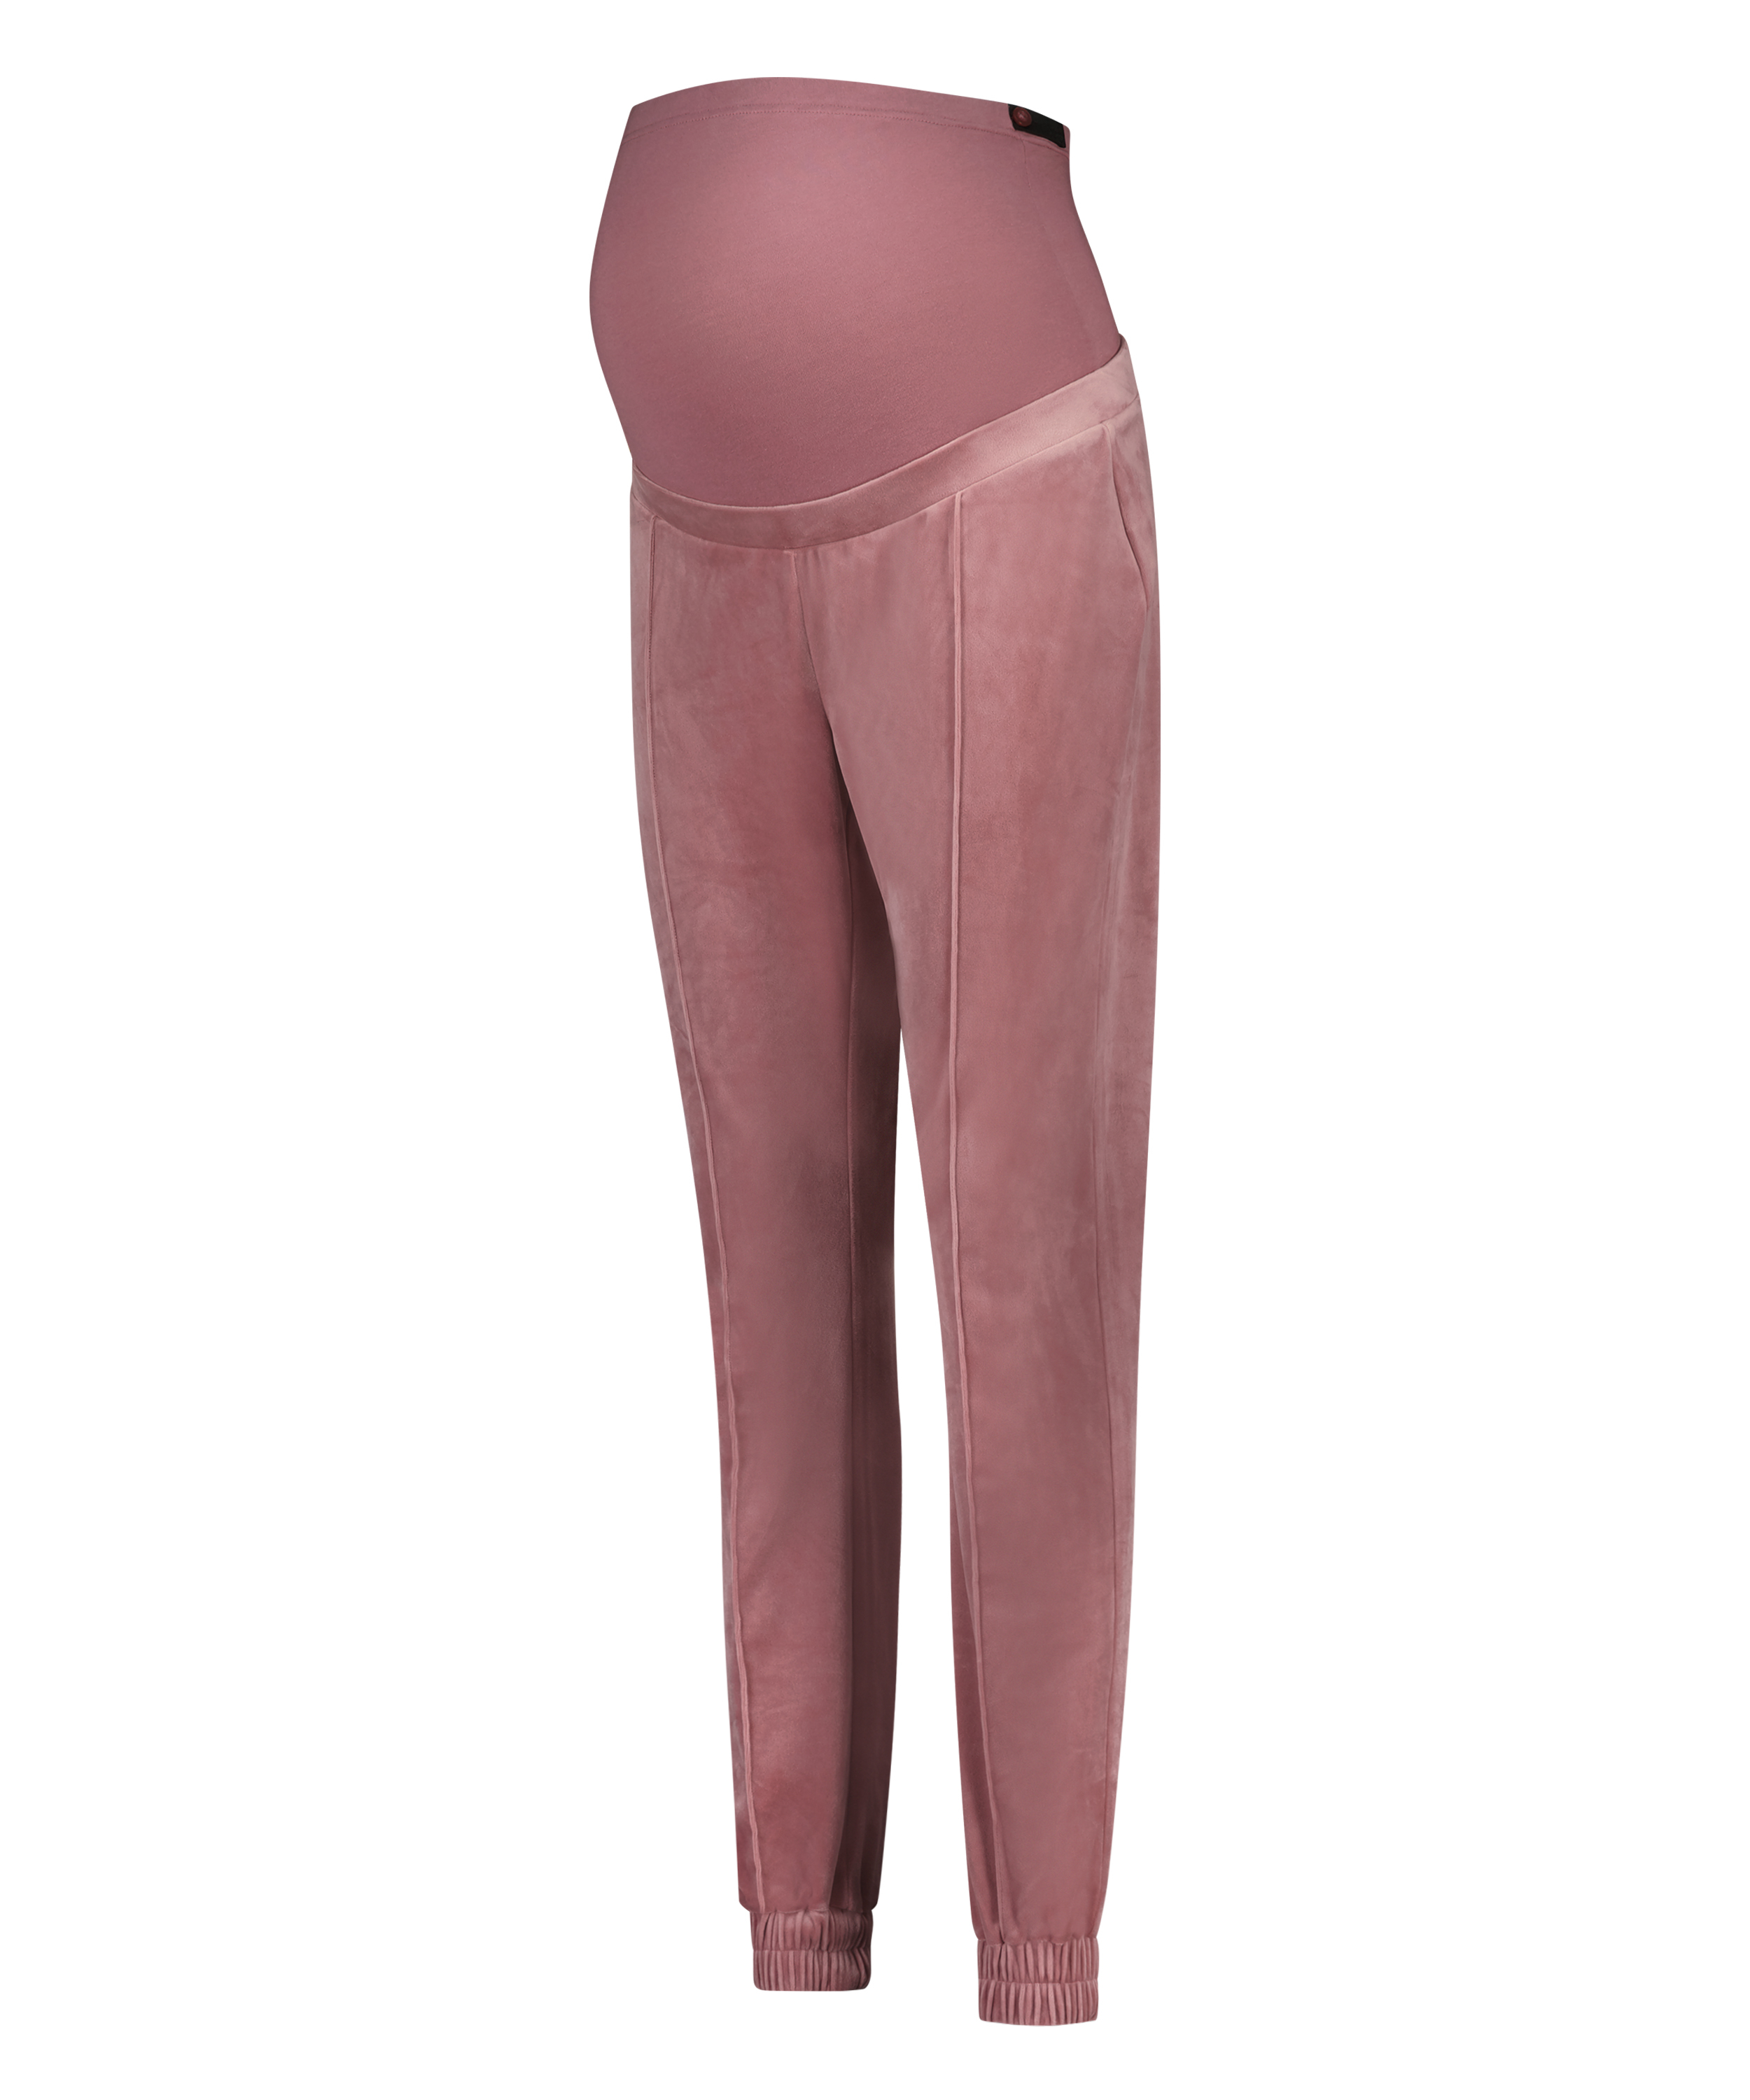 Velours Pintuck maternity jogging bottoms, Pink, main